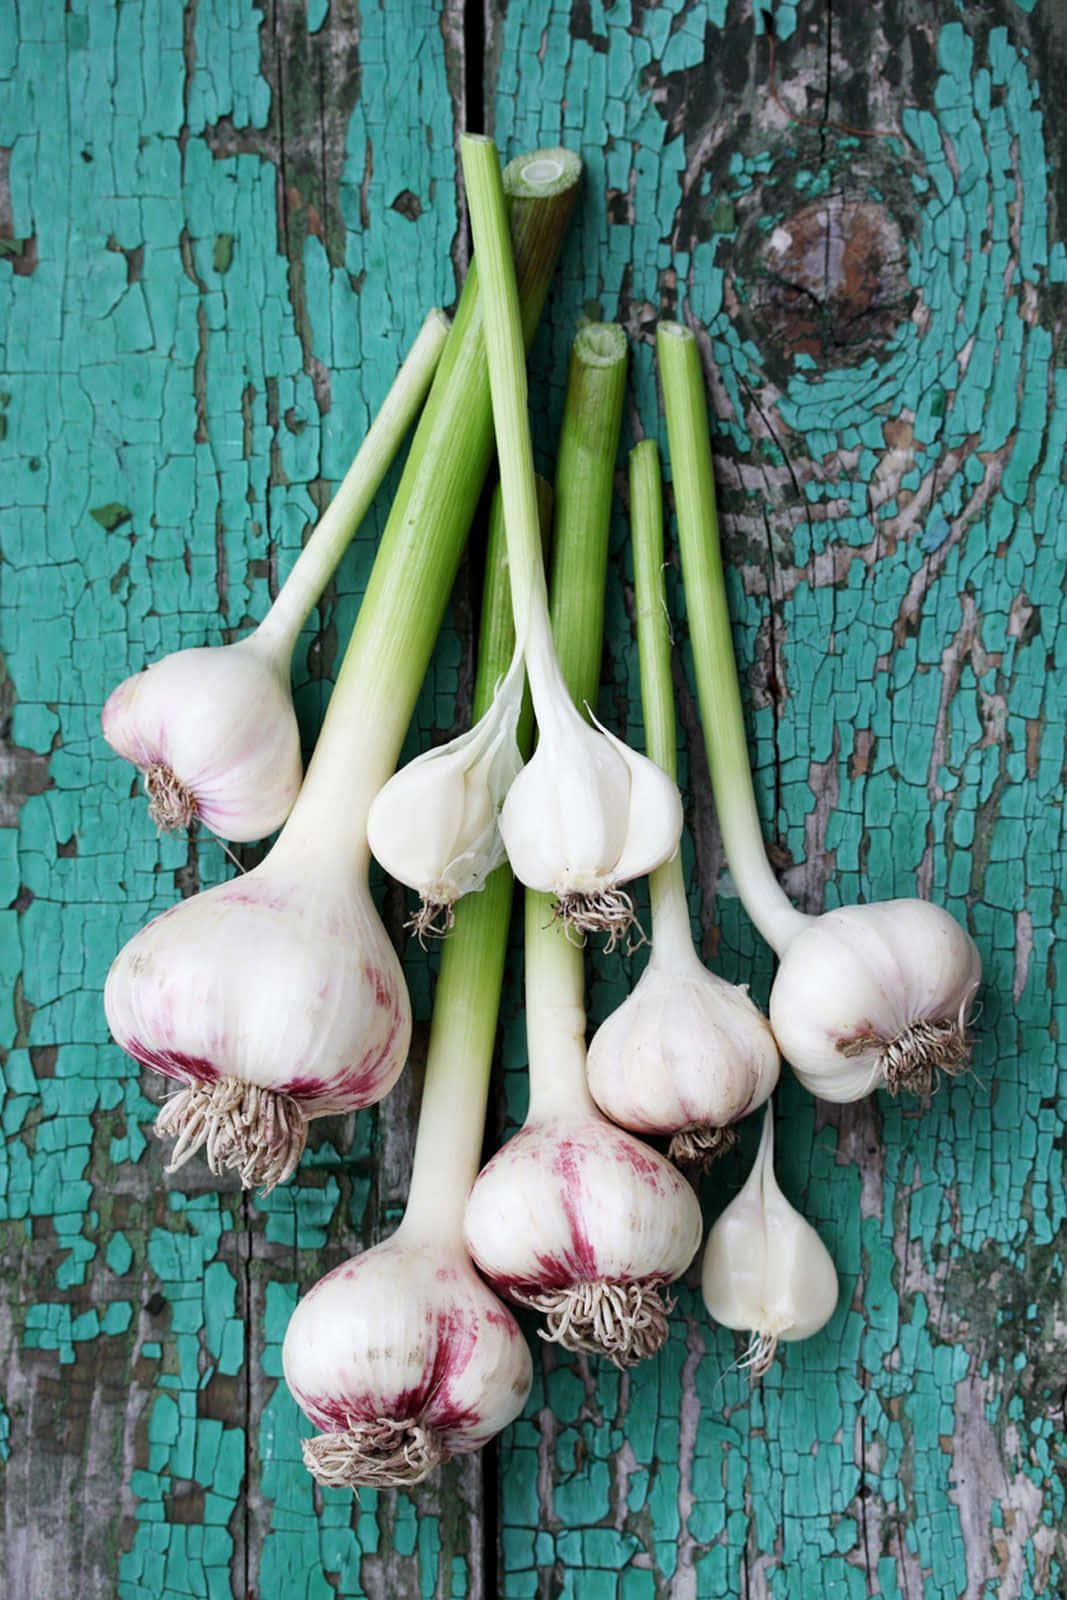 "A Healthy Garlic Plant - Ready To Harvest!"